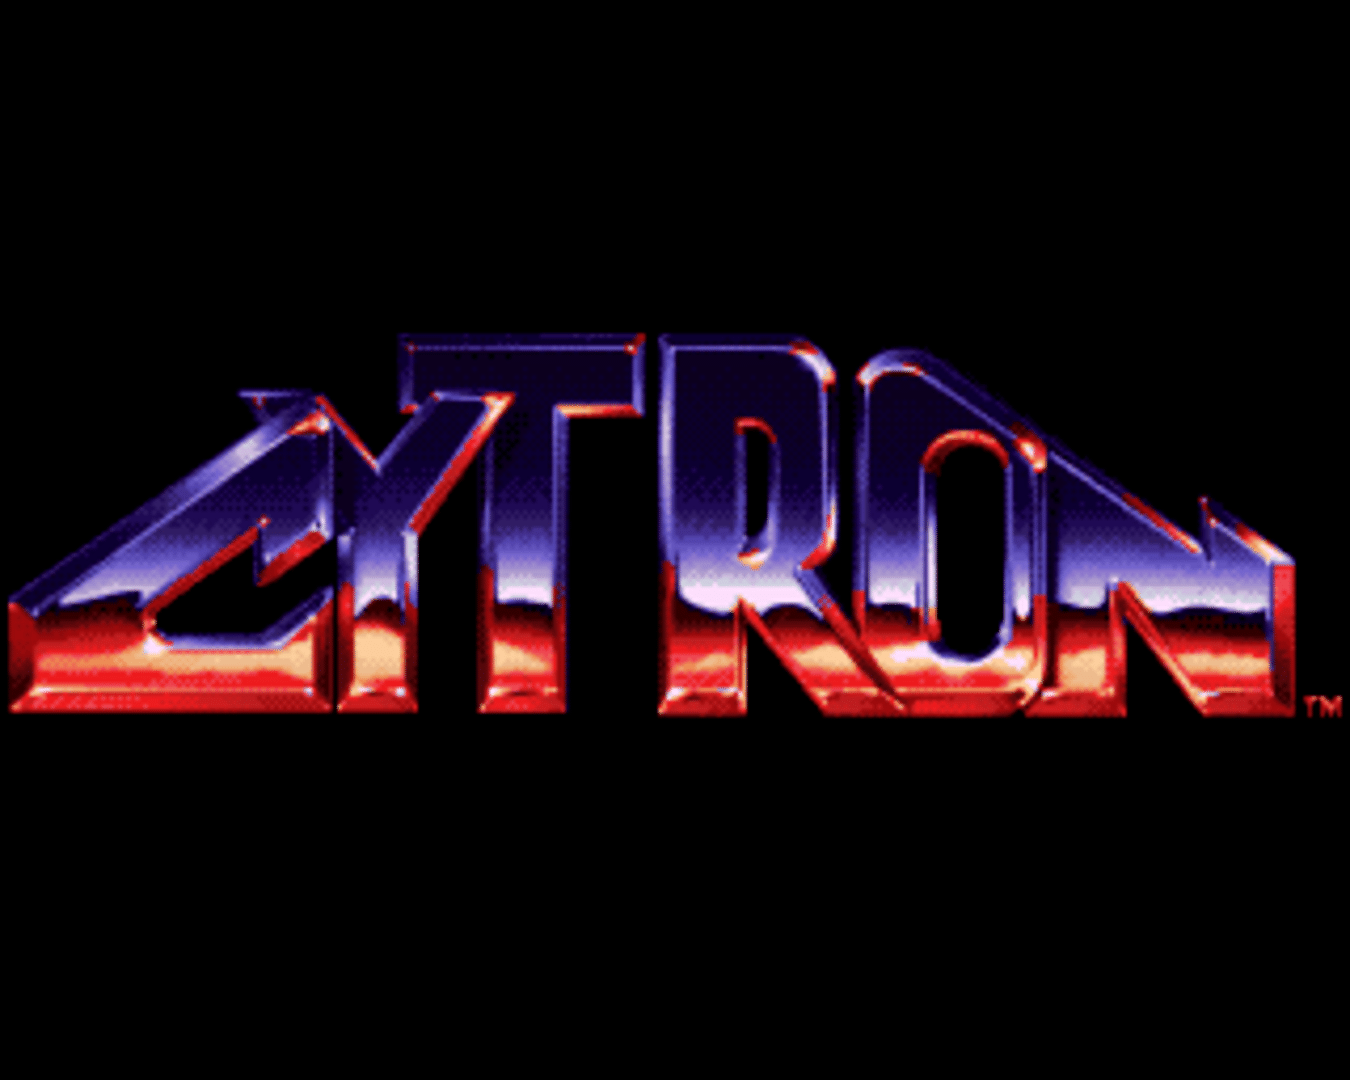 Cytron screenshot